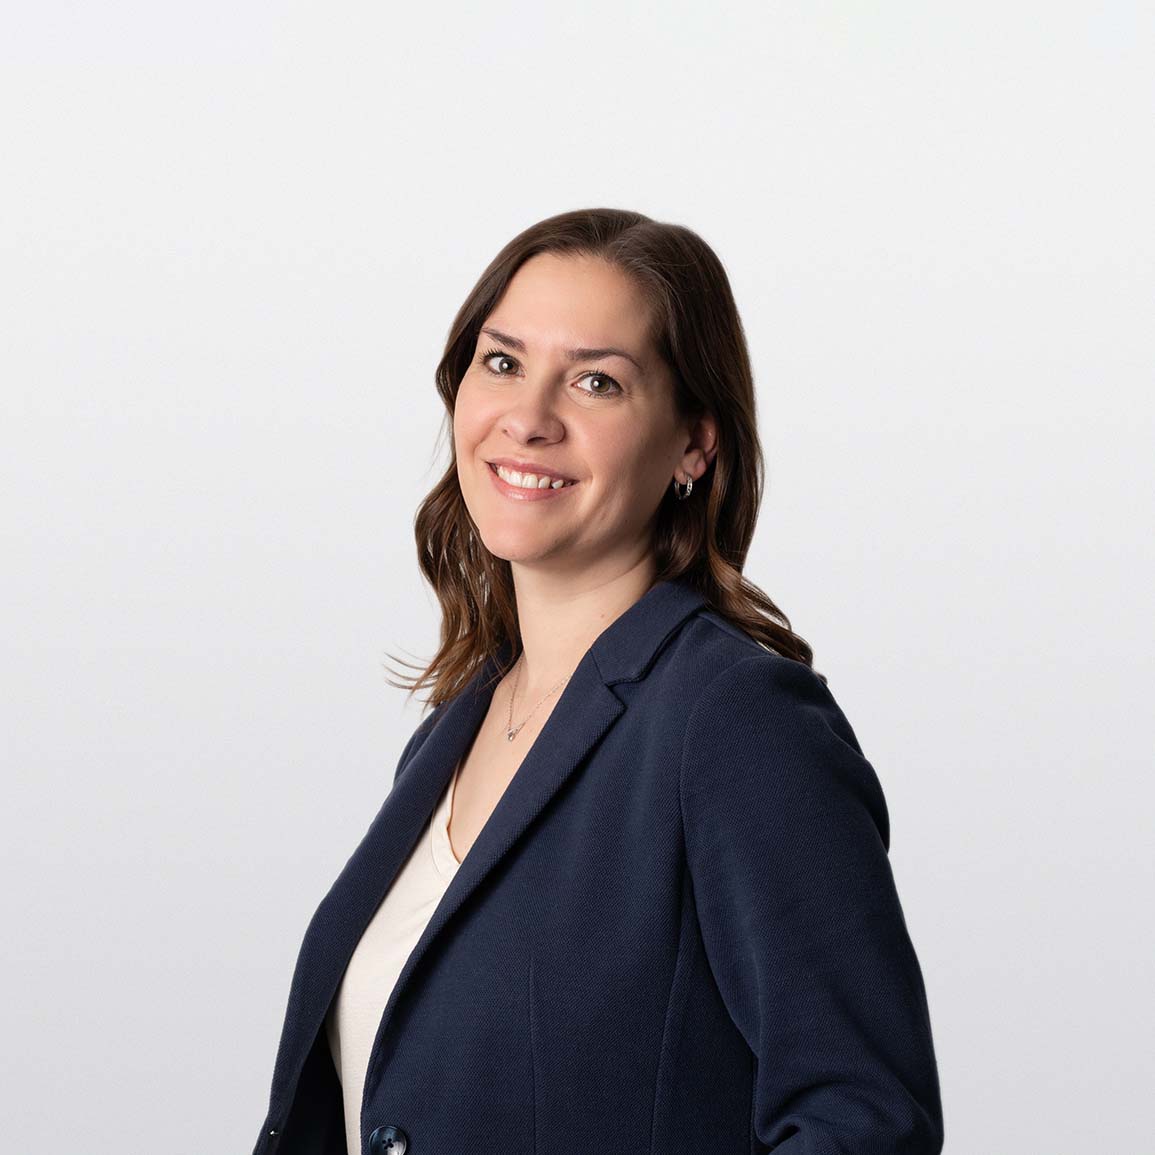 Image of Melissa Chapman financial advisor on white background